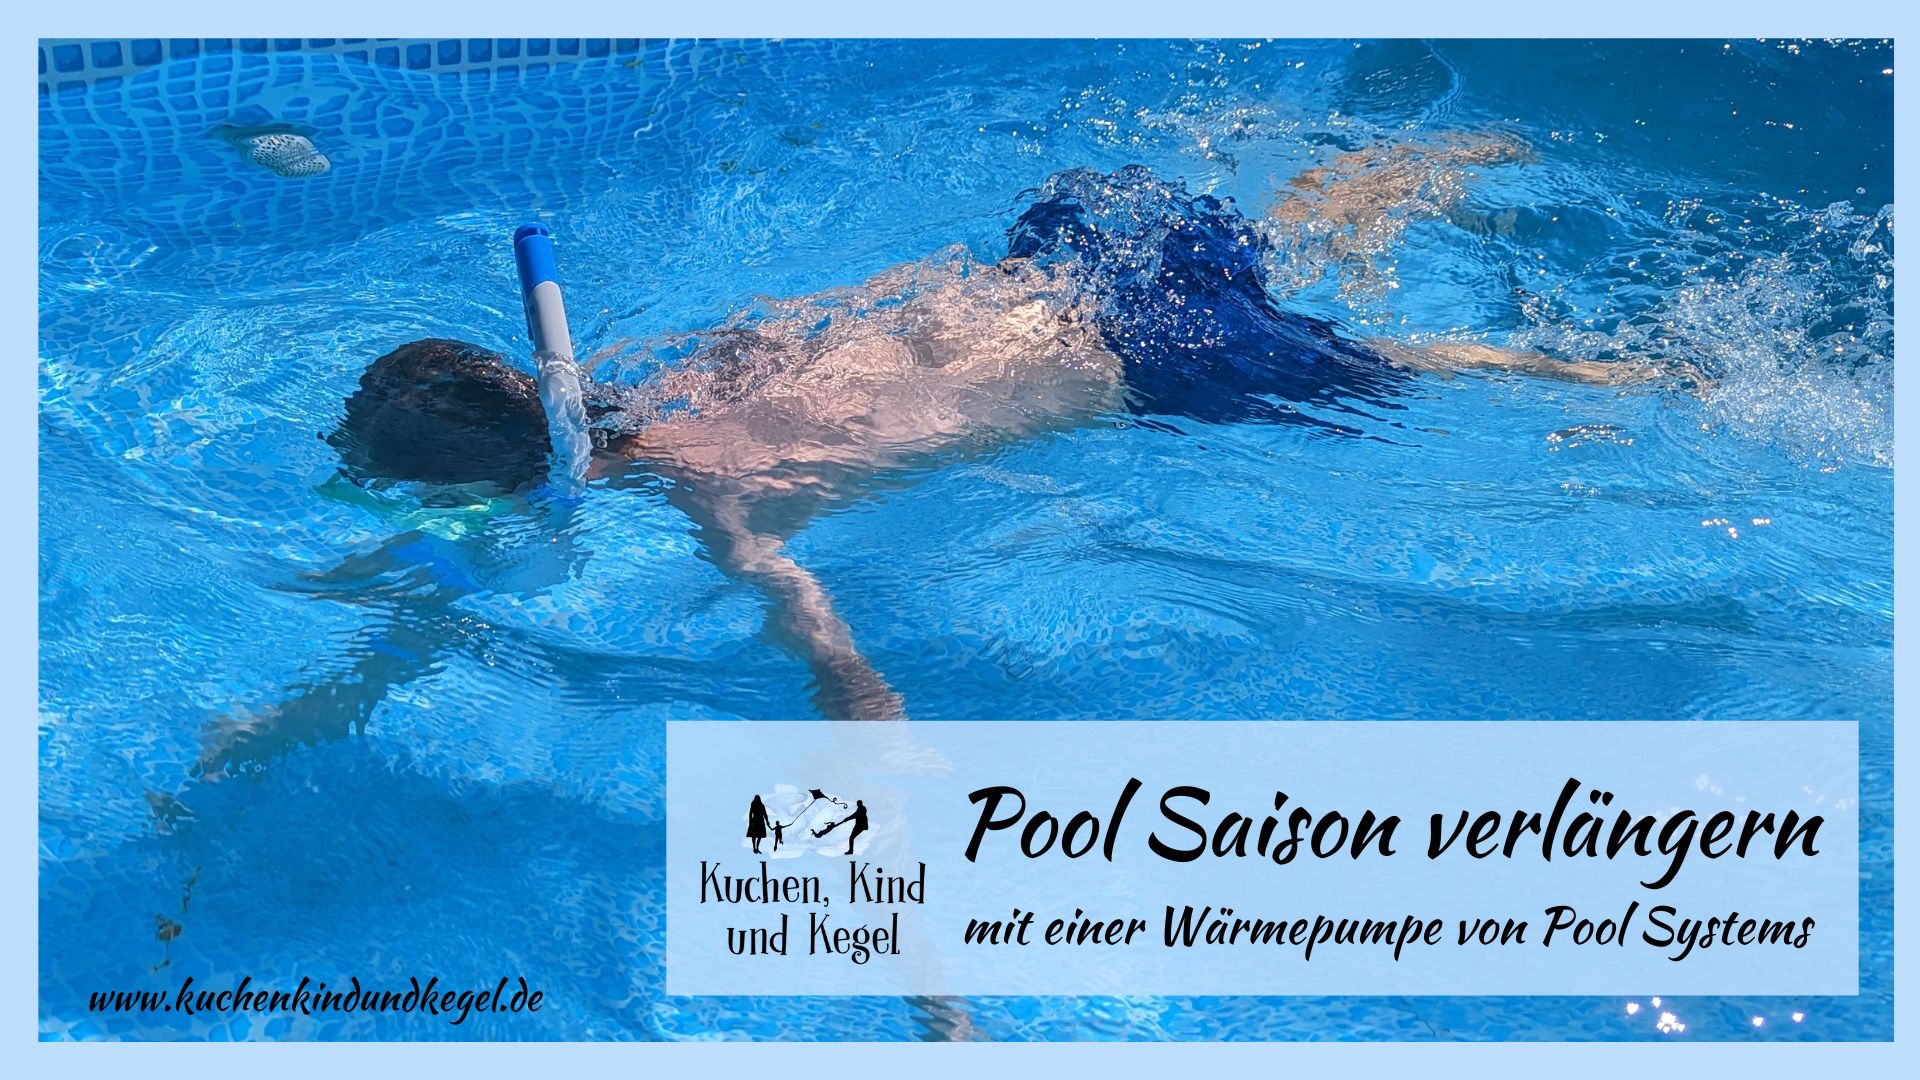 Pool Saison verlängern mit einer Wärmepumpe von Pool Systems - Pool - Gartenpool - Swimmingpool - Wärmepumpe - Pool Wärmepumpe Beitragsbild